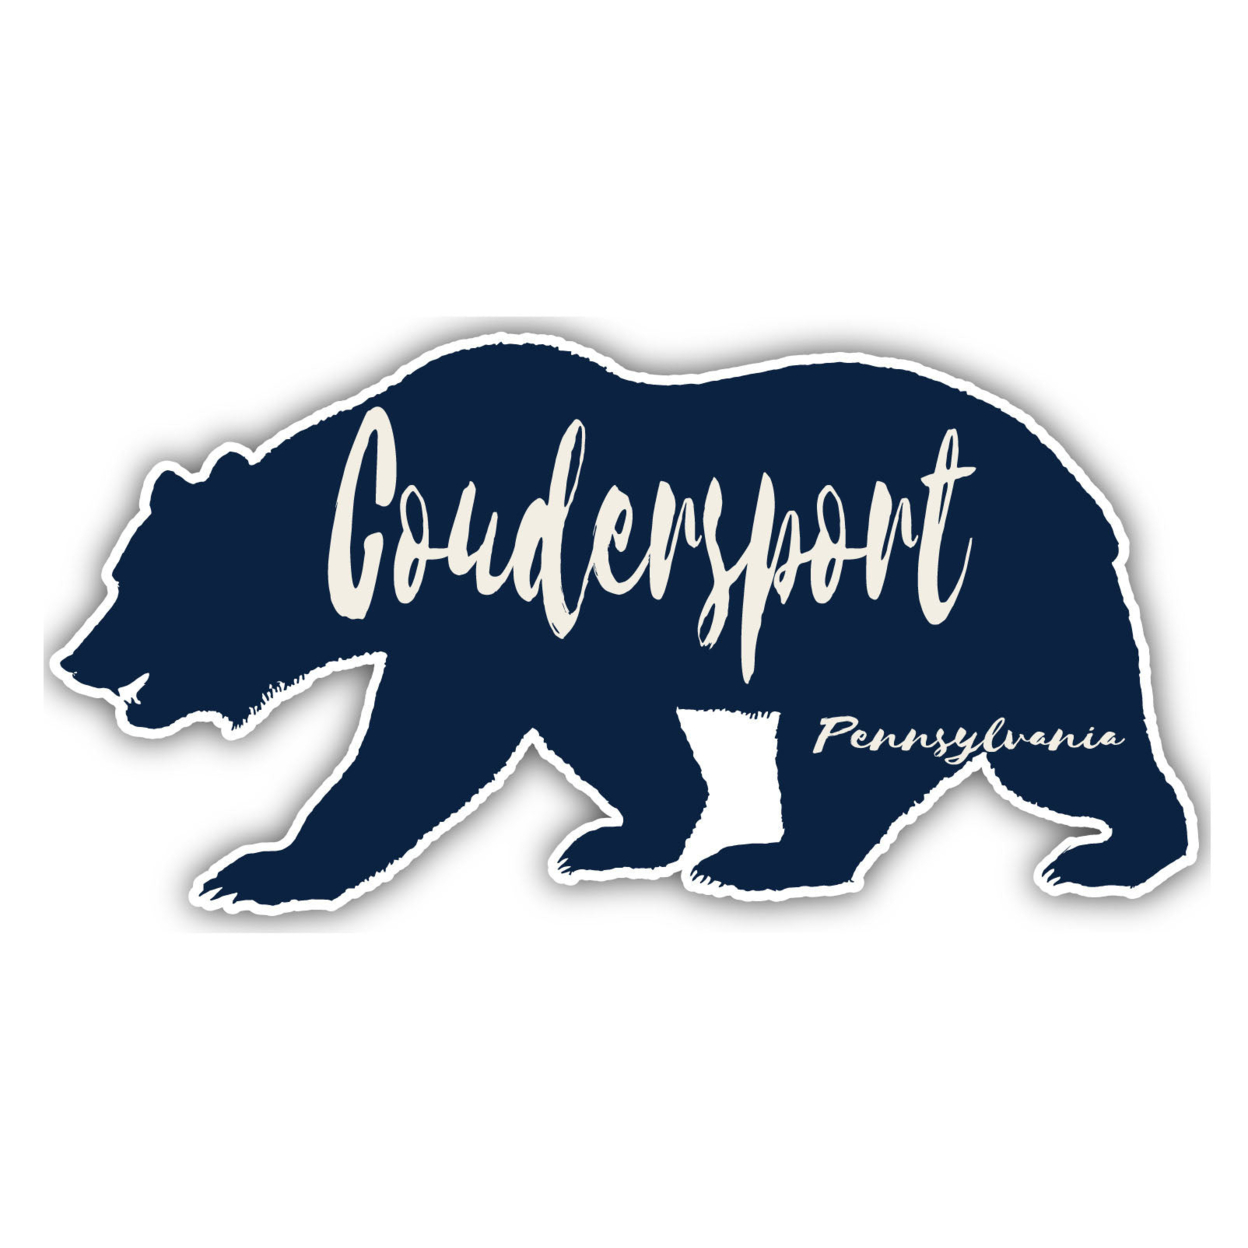 Coudersport Pennsylvania Souvenir Decorative Stickers (Choose Theme And Size) - Single Unit, 6-Inch, Adventures Awaits